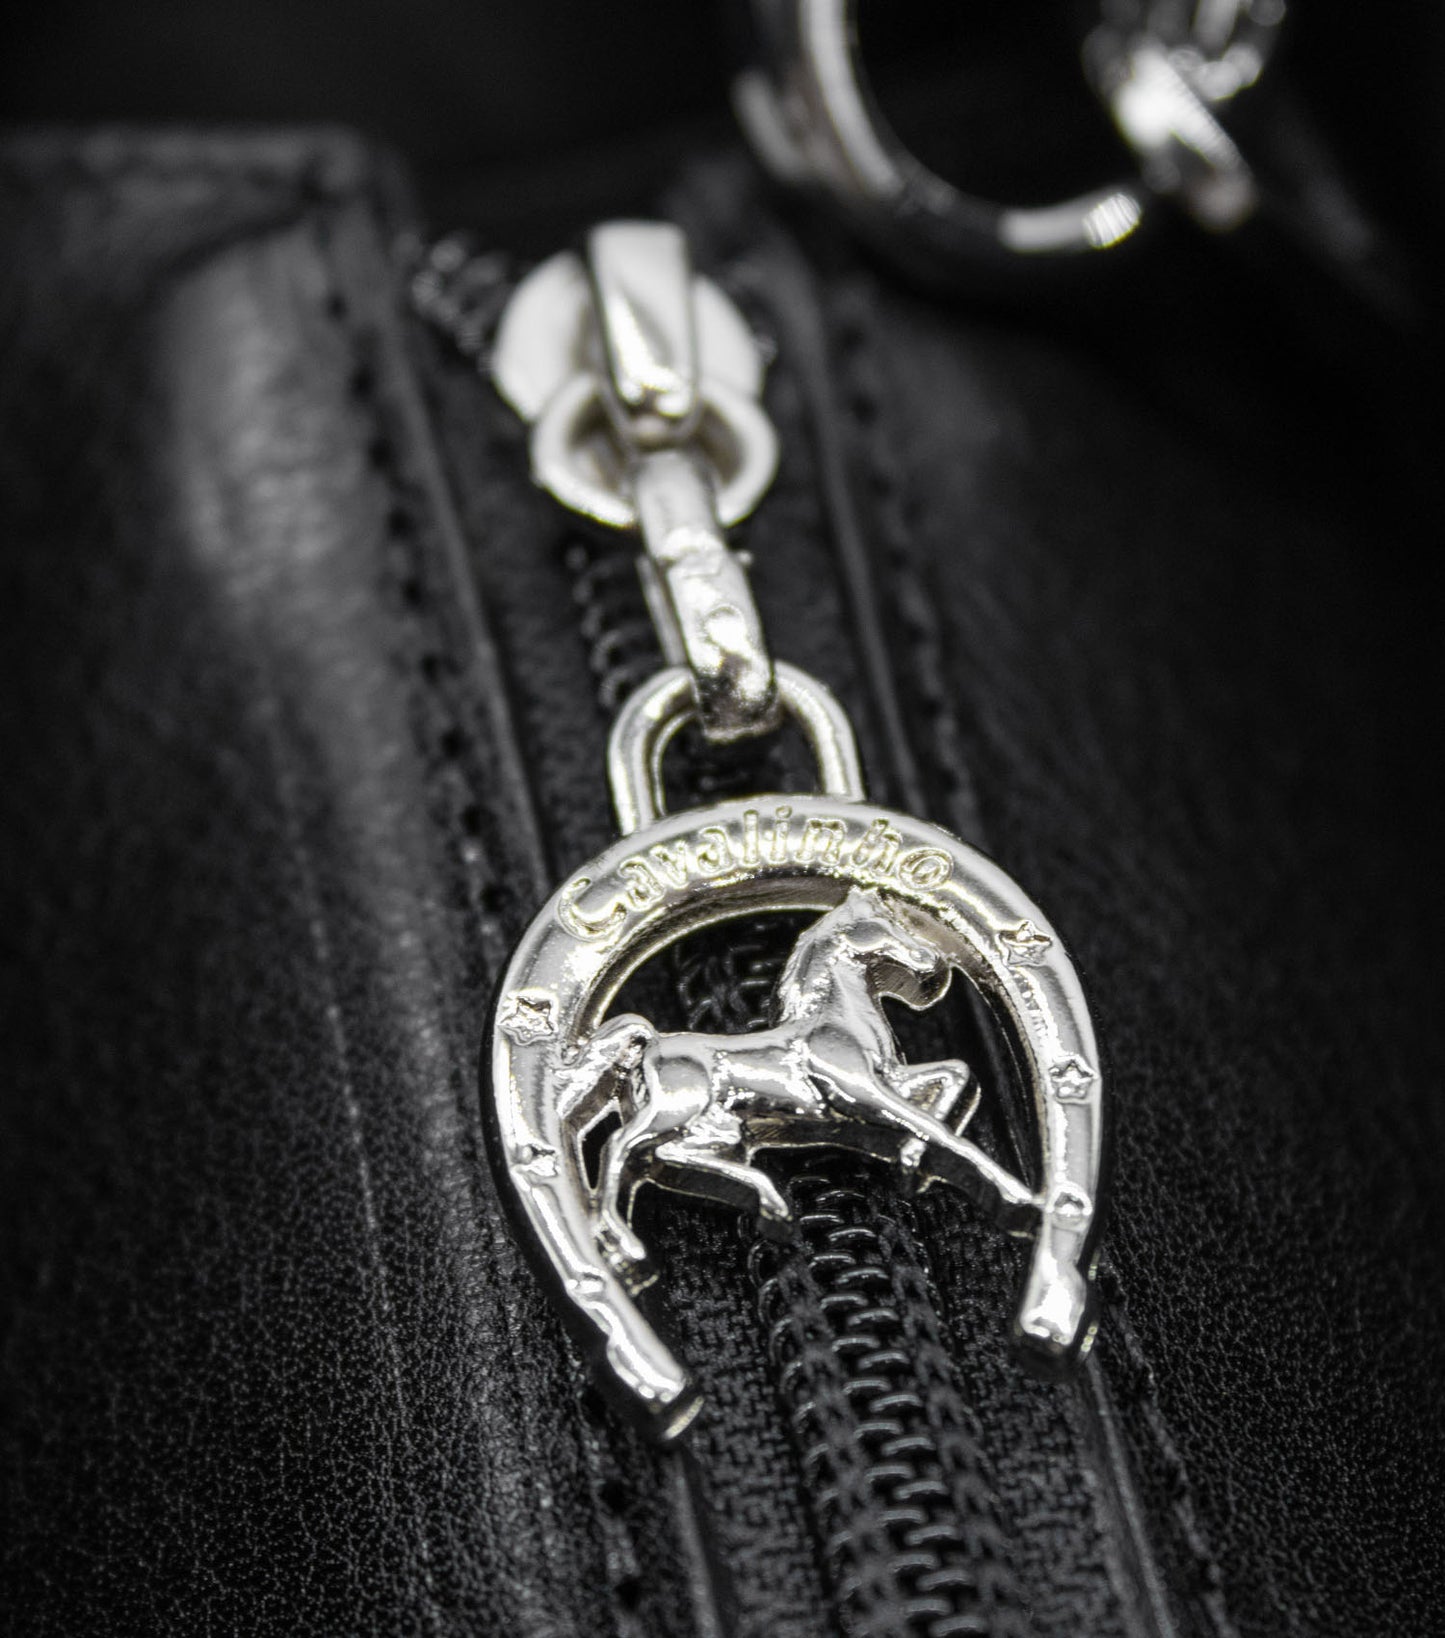 Cavalinho Cavalo Lusitano Leather Handbag - Black - 18090480.01_P04